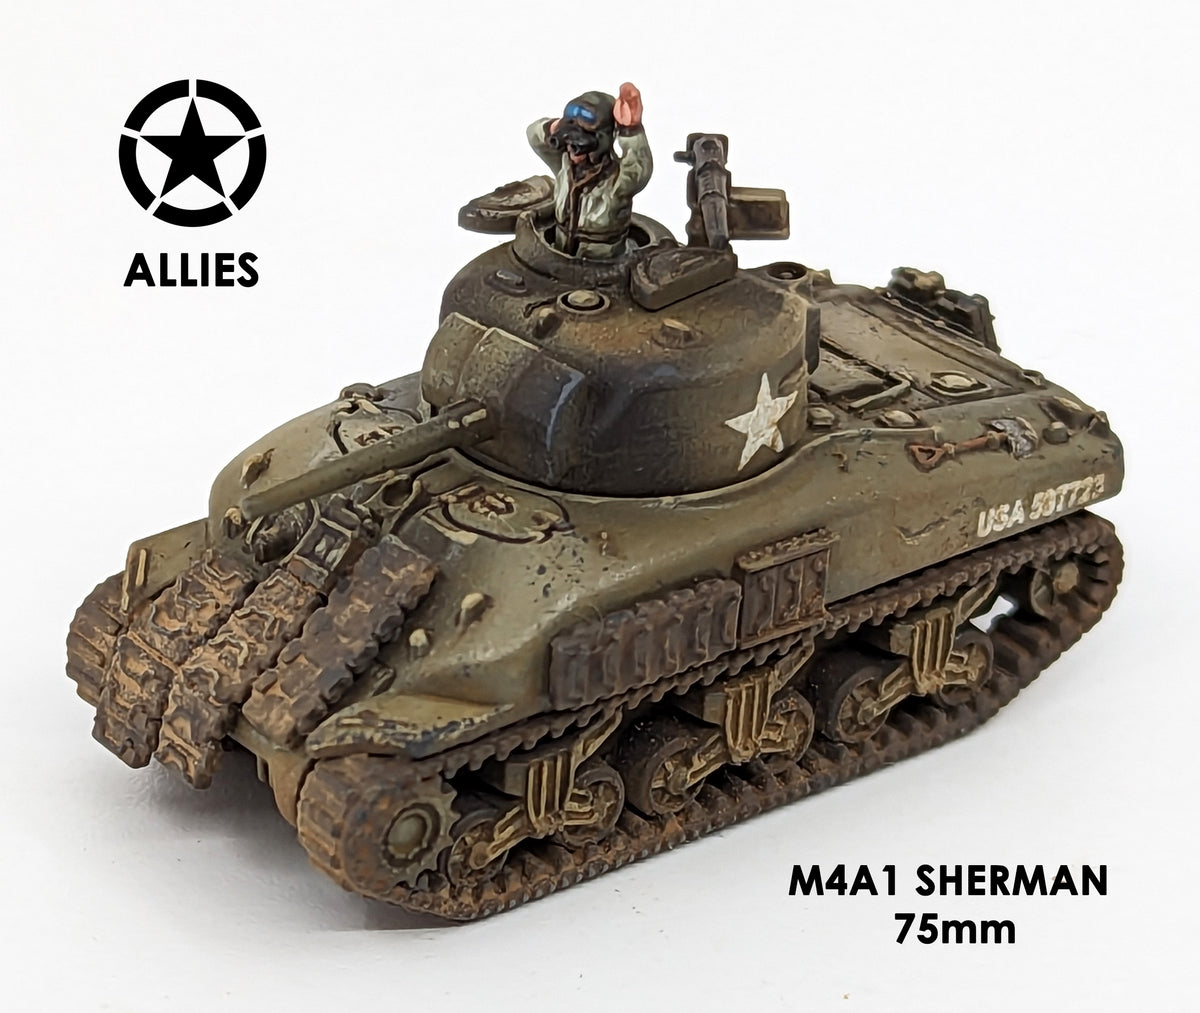 M4A1 Шерманы